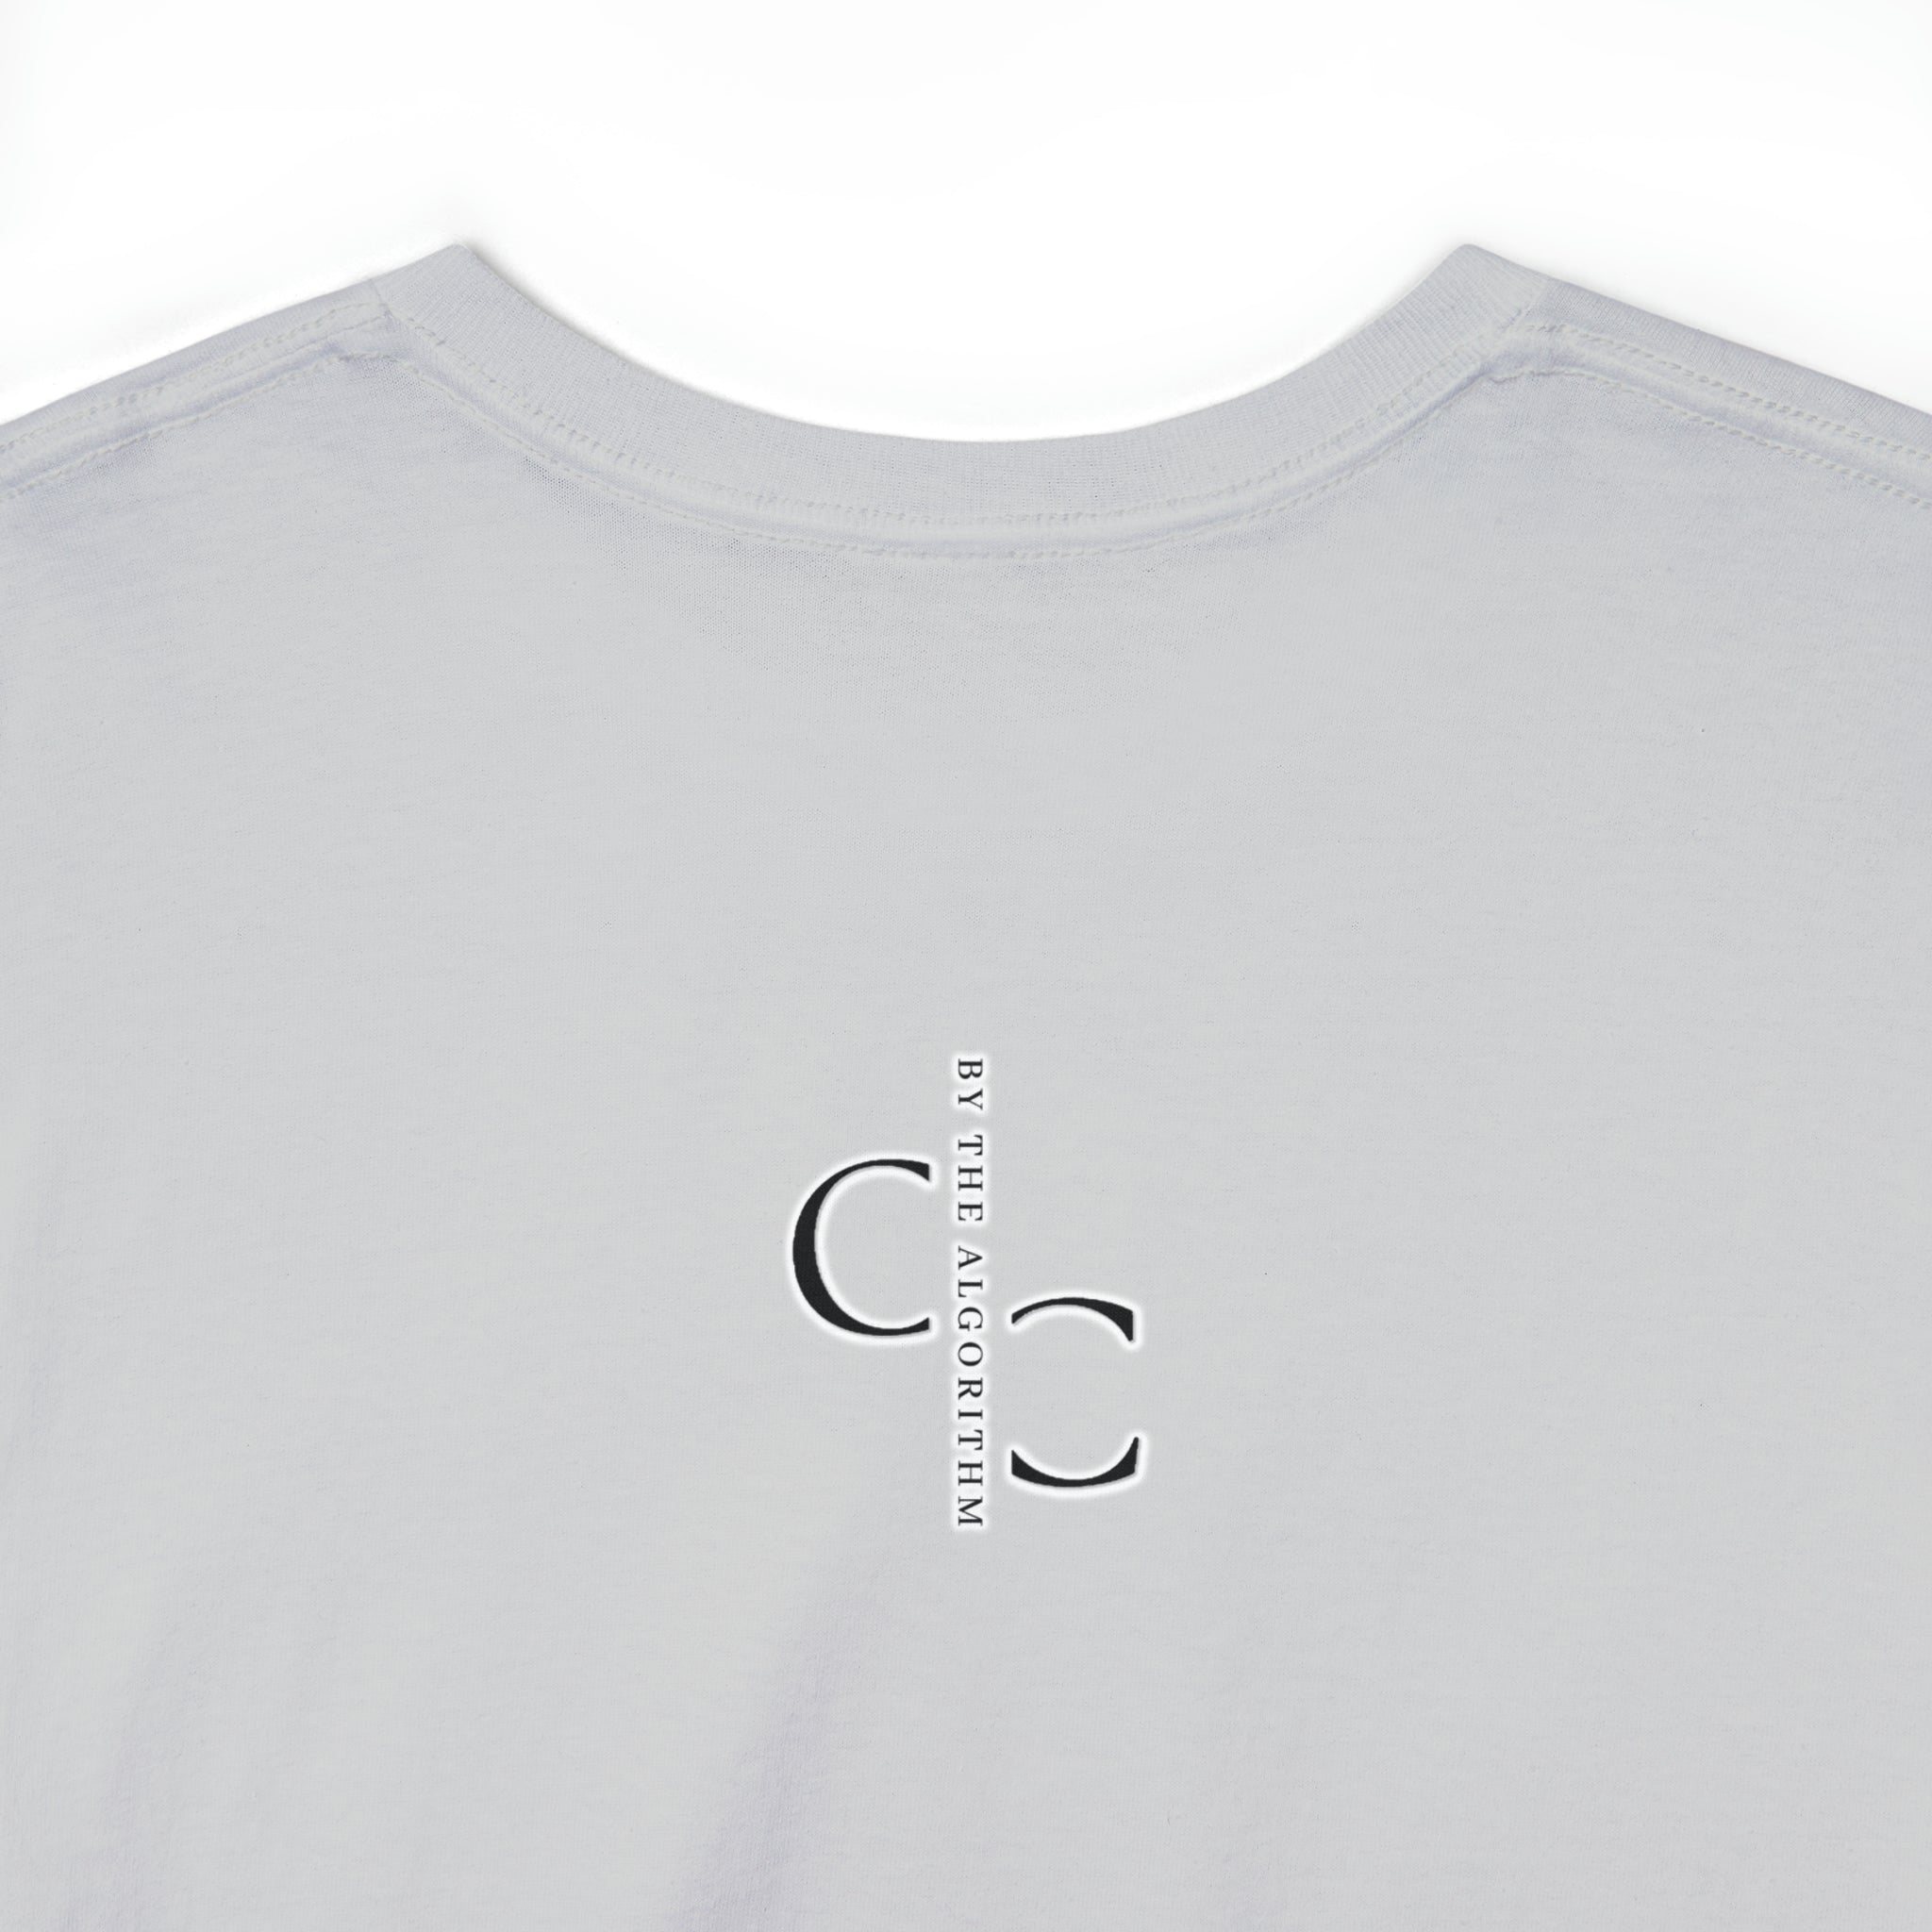 Chai is Tea-riffic T-Shirt Design by C&C